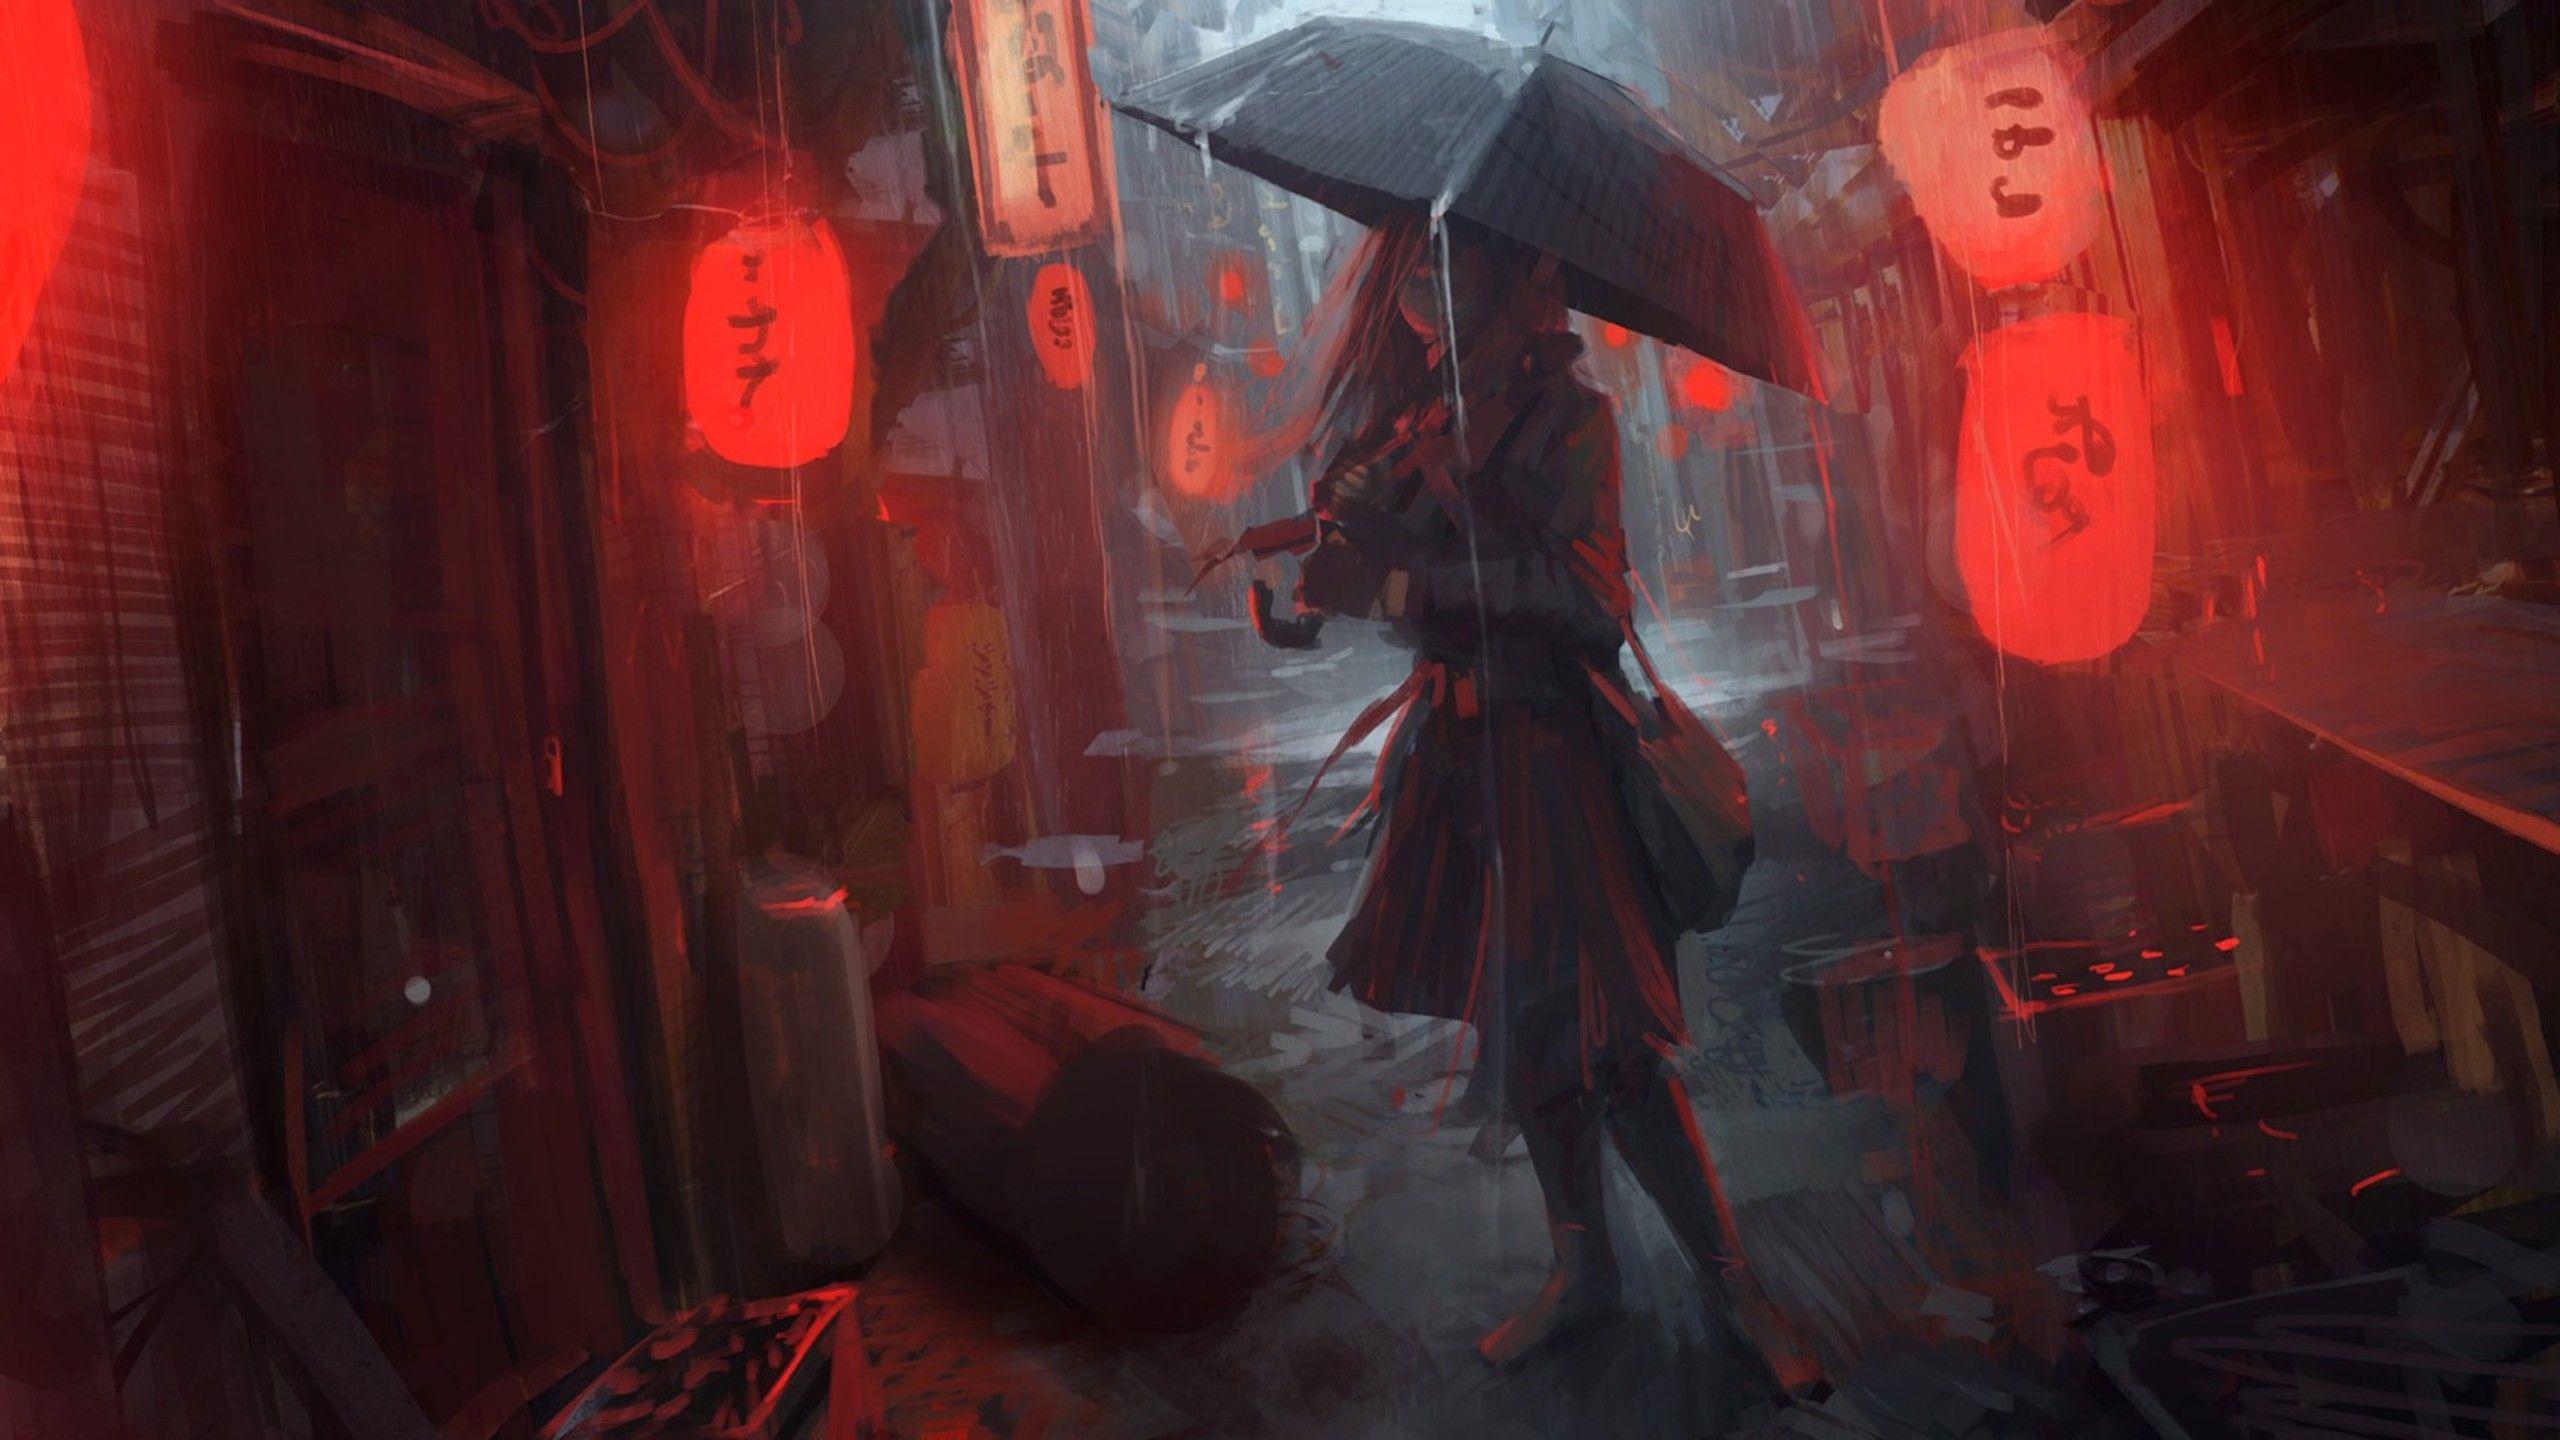 Anime Girl In Rain, HD Anime, 4k Wallpaper, Image